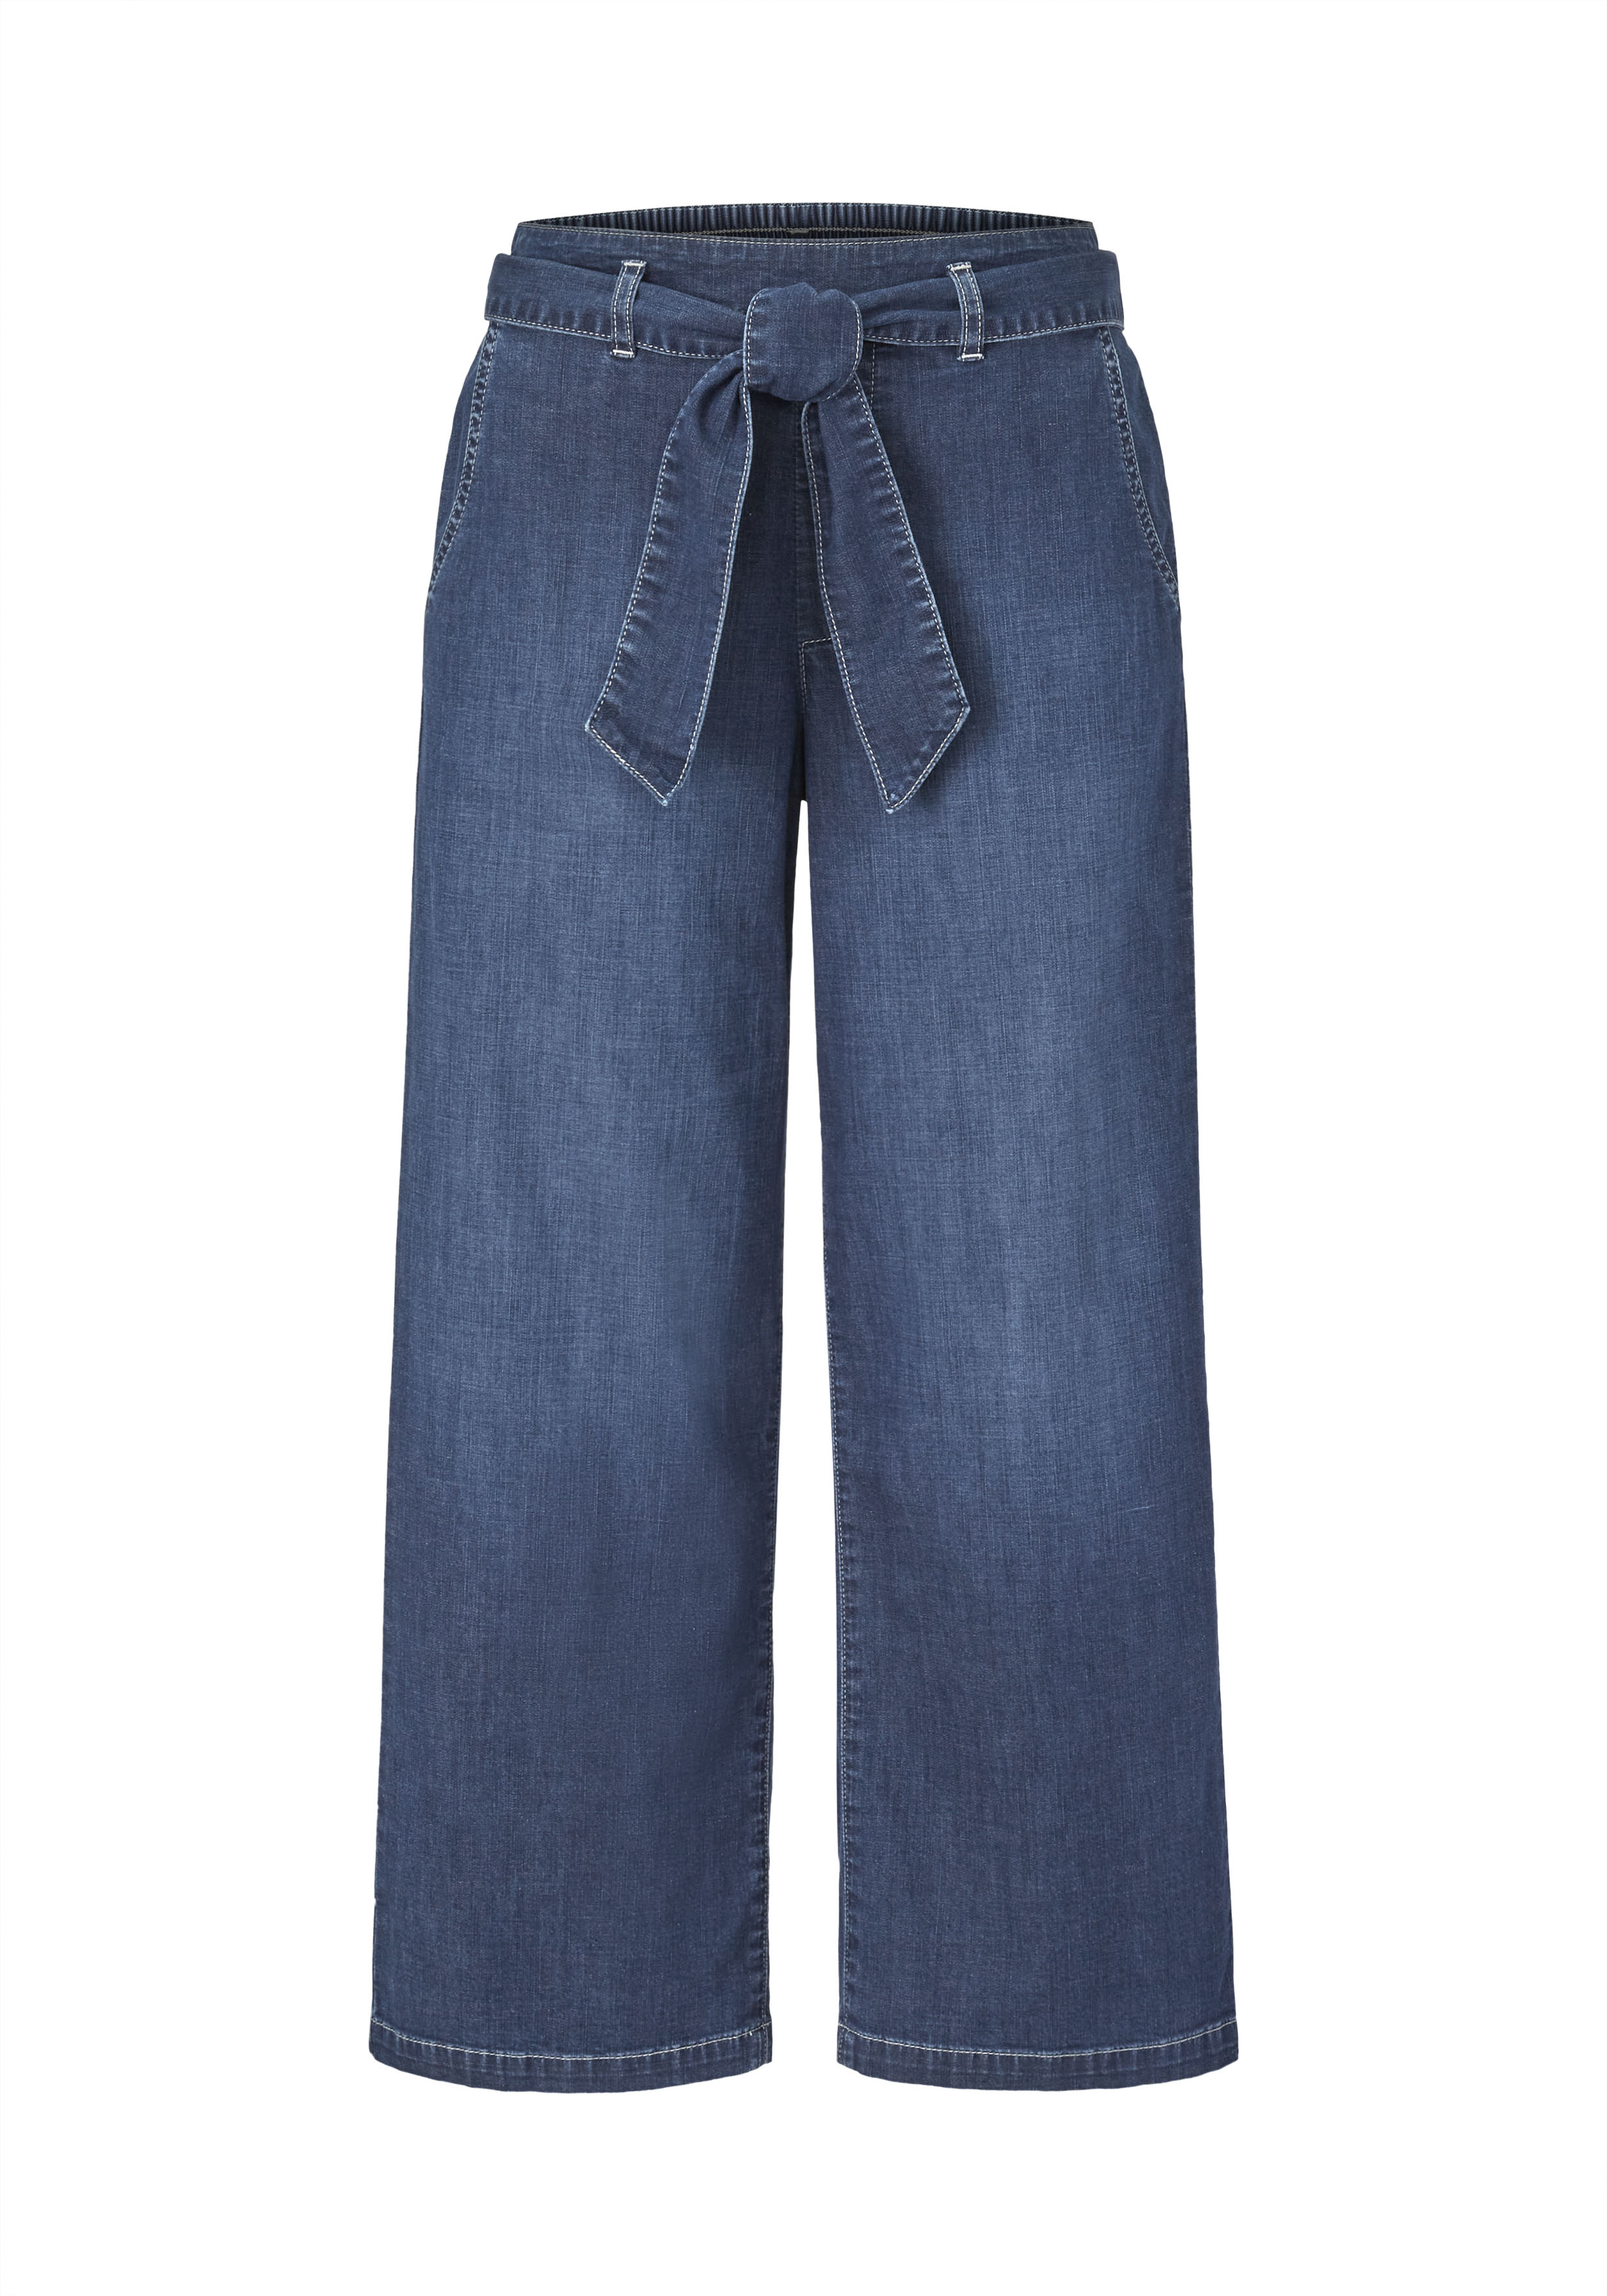 605403766000-5906_damen-high-rise-jeans-culotte-paddocks_1.jpg